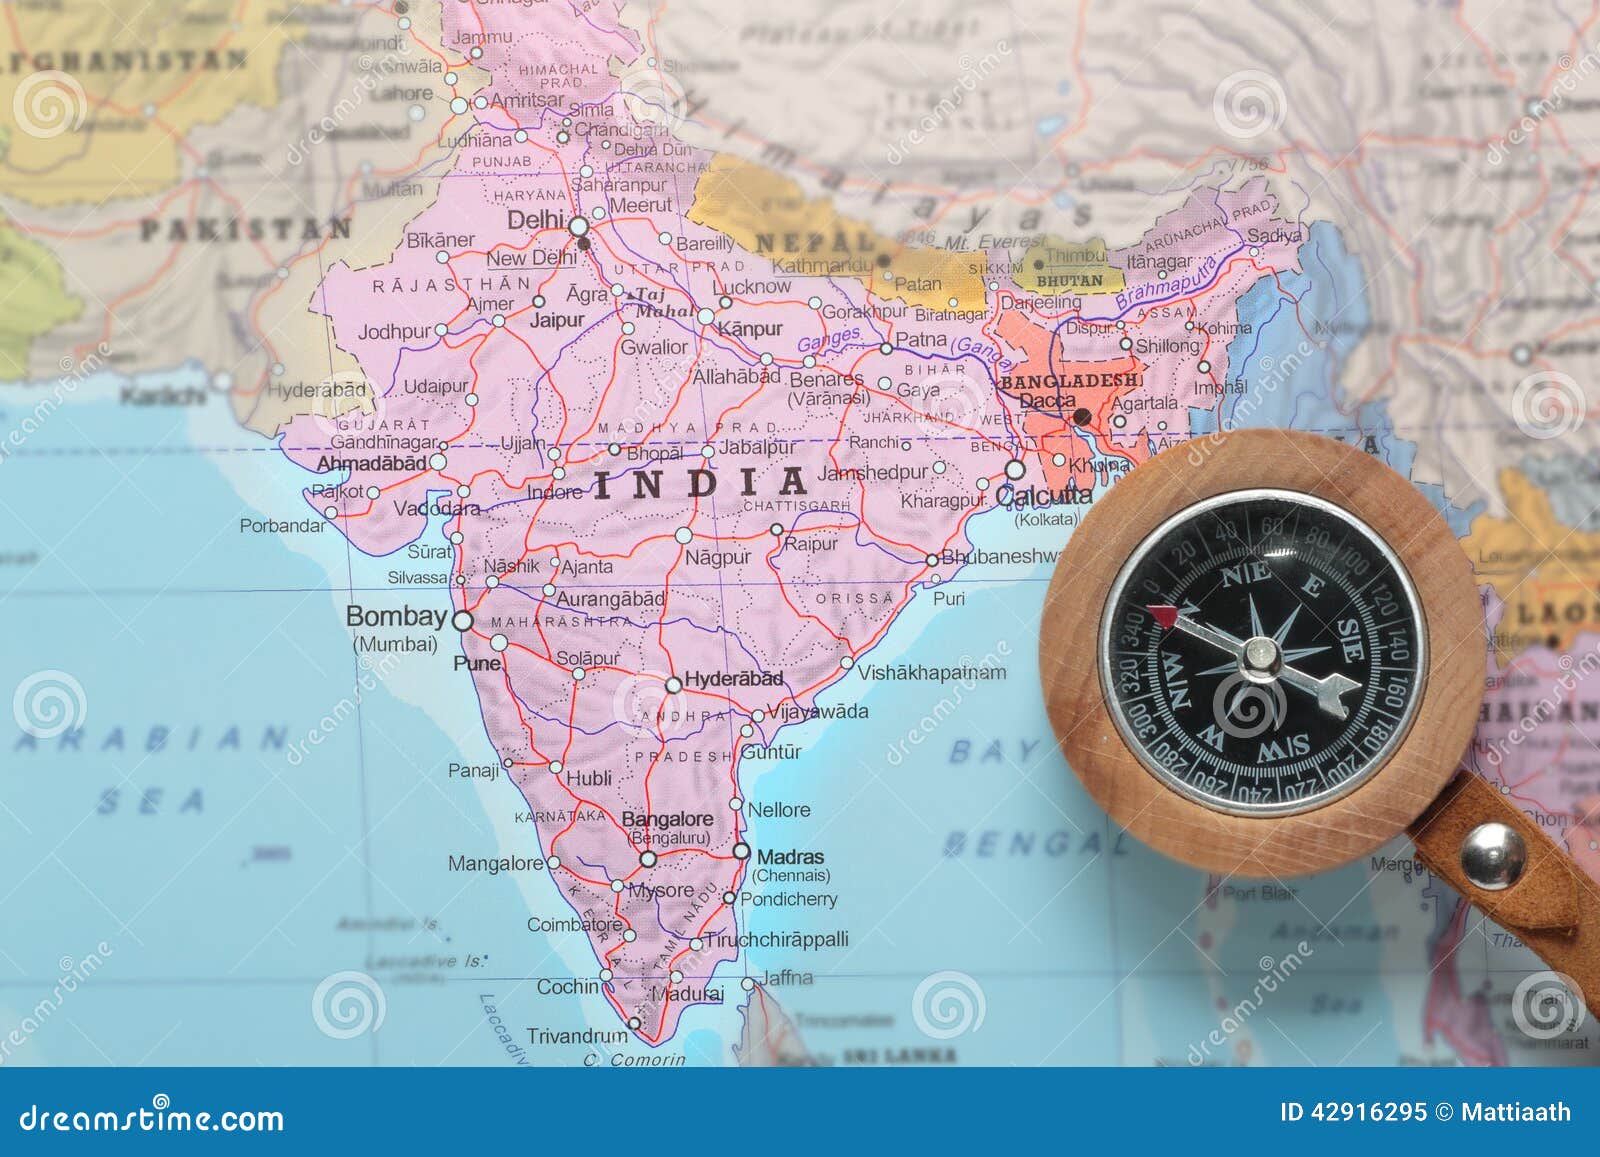 compass tours india